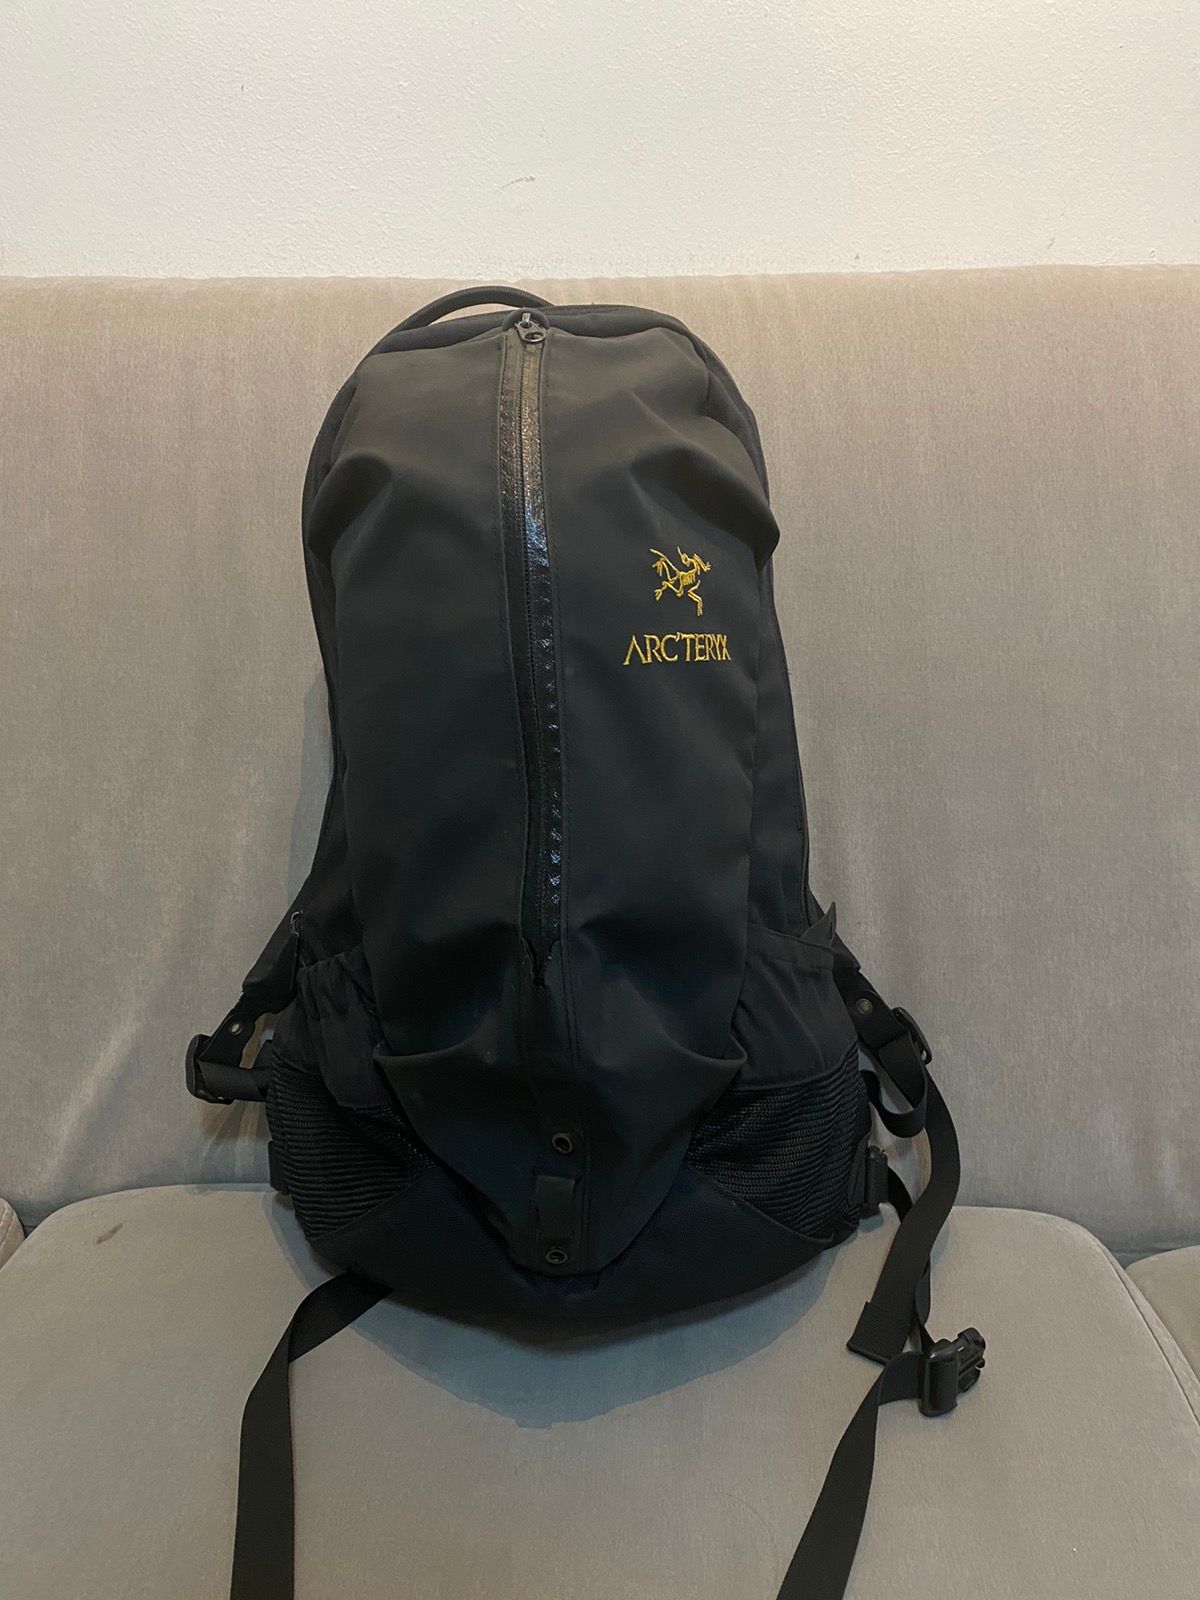 Arc'teryx Mantis 20 Backpack, Black Sapphire, Size Os